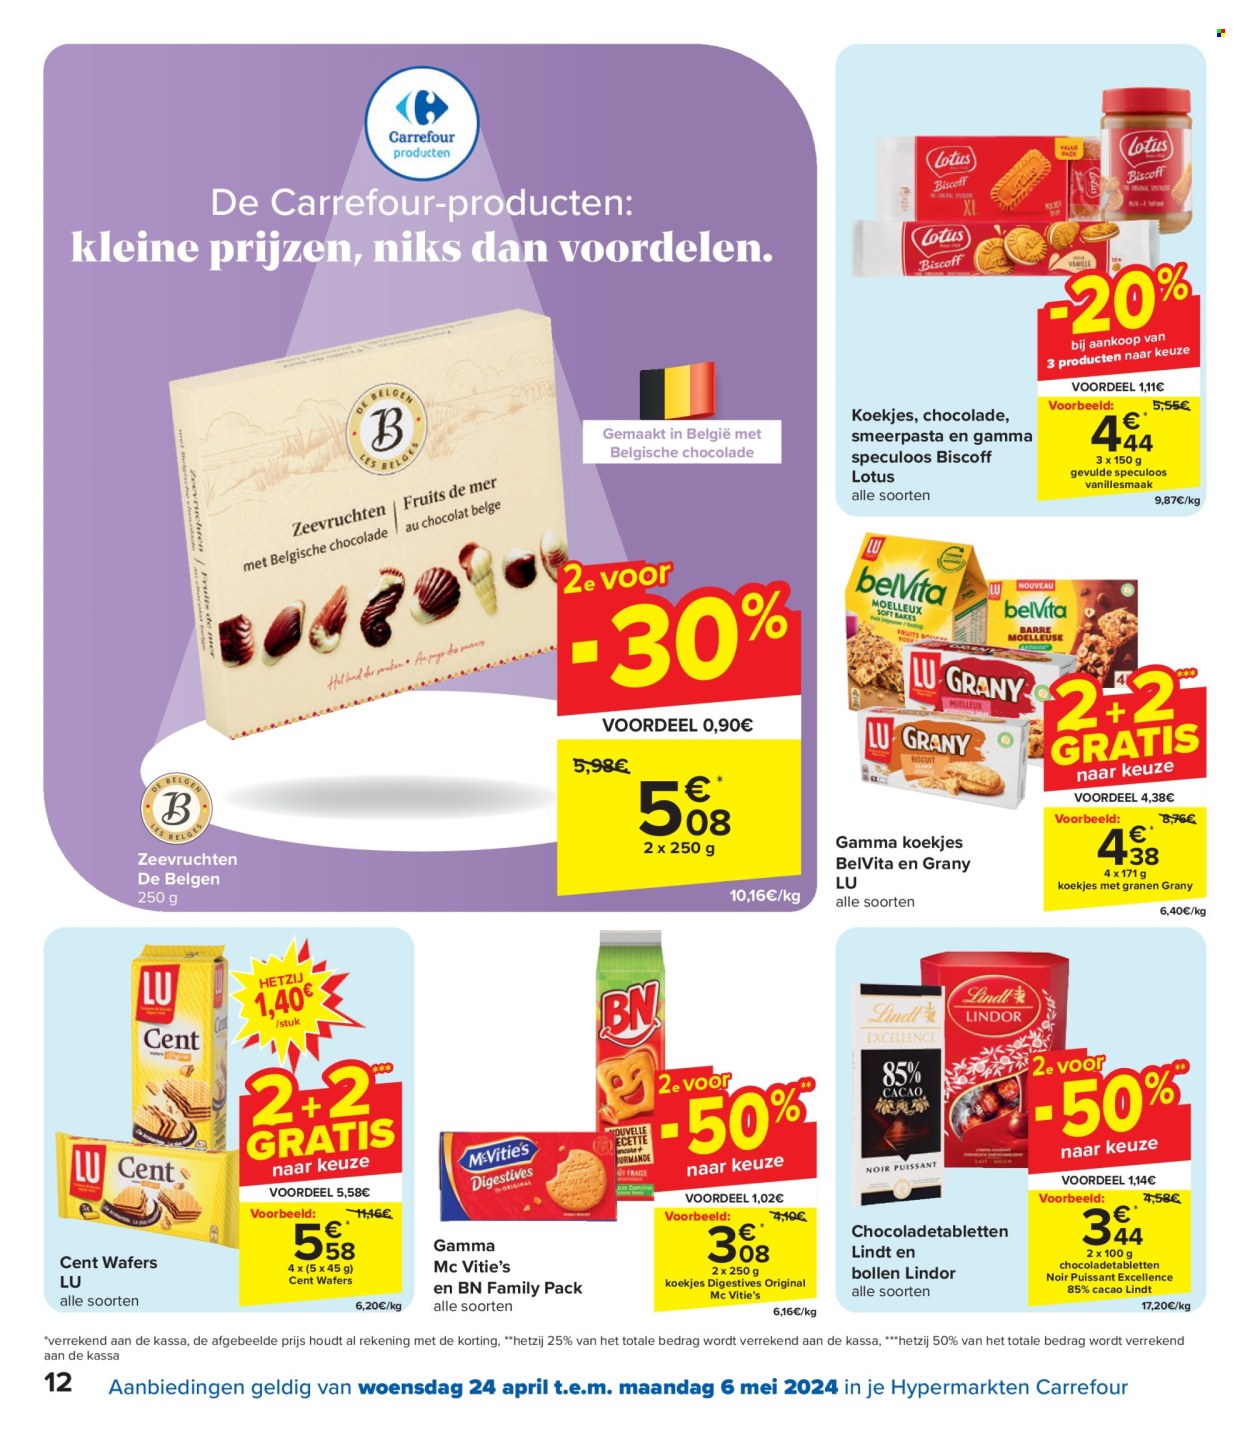 thumbnail - Catalogue Carrefour hypermarkt - 24/04/2024 - 06/05/2024 - Produits soldés - speculoos, Lindor, Lotus, Lindt, LU, cacao. Page 12.